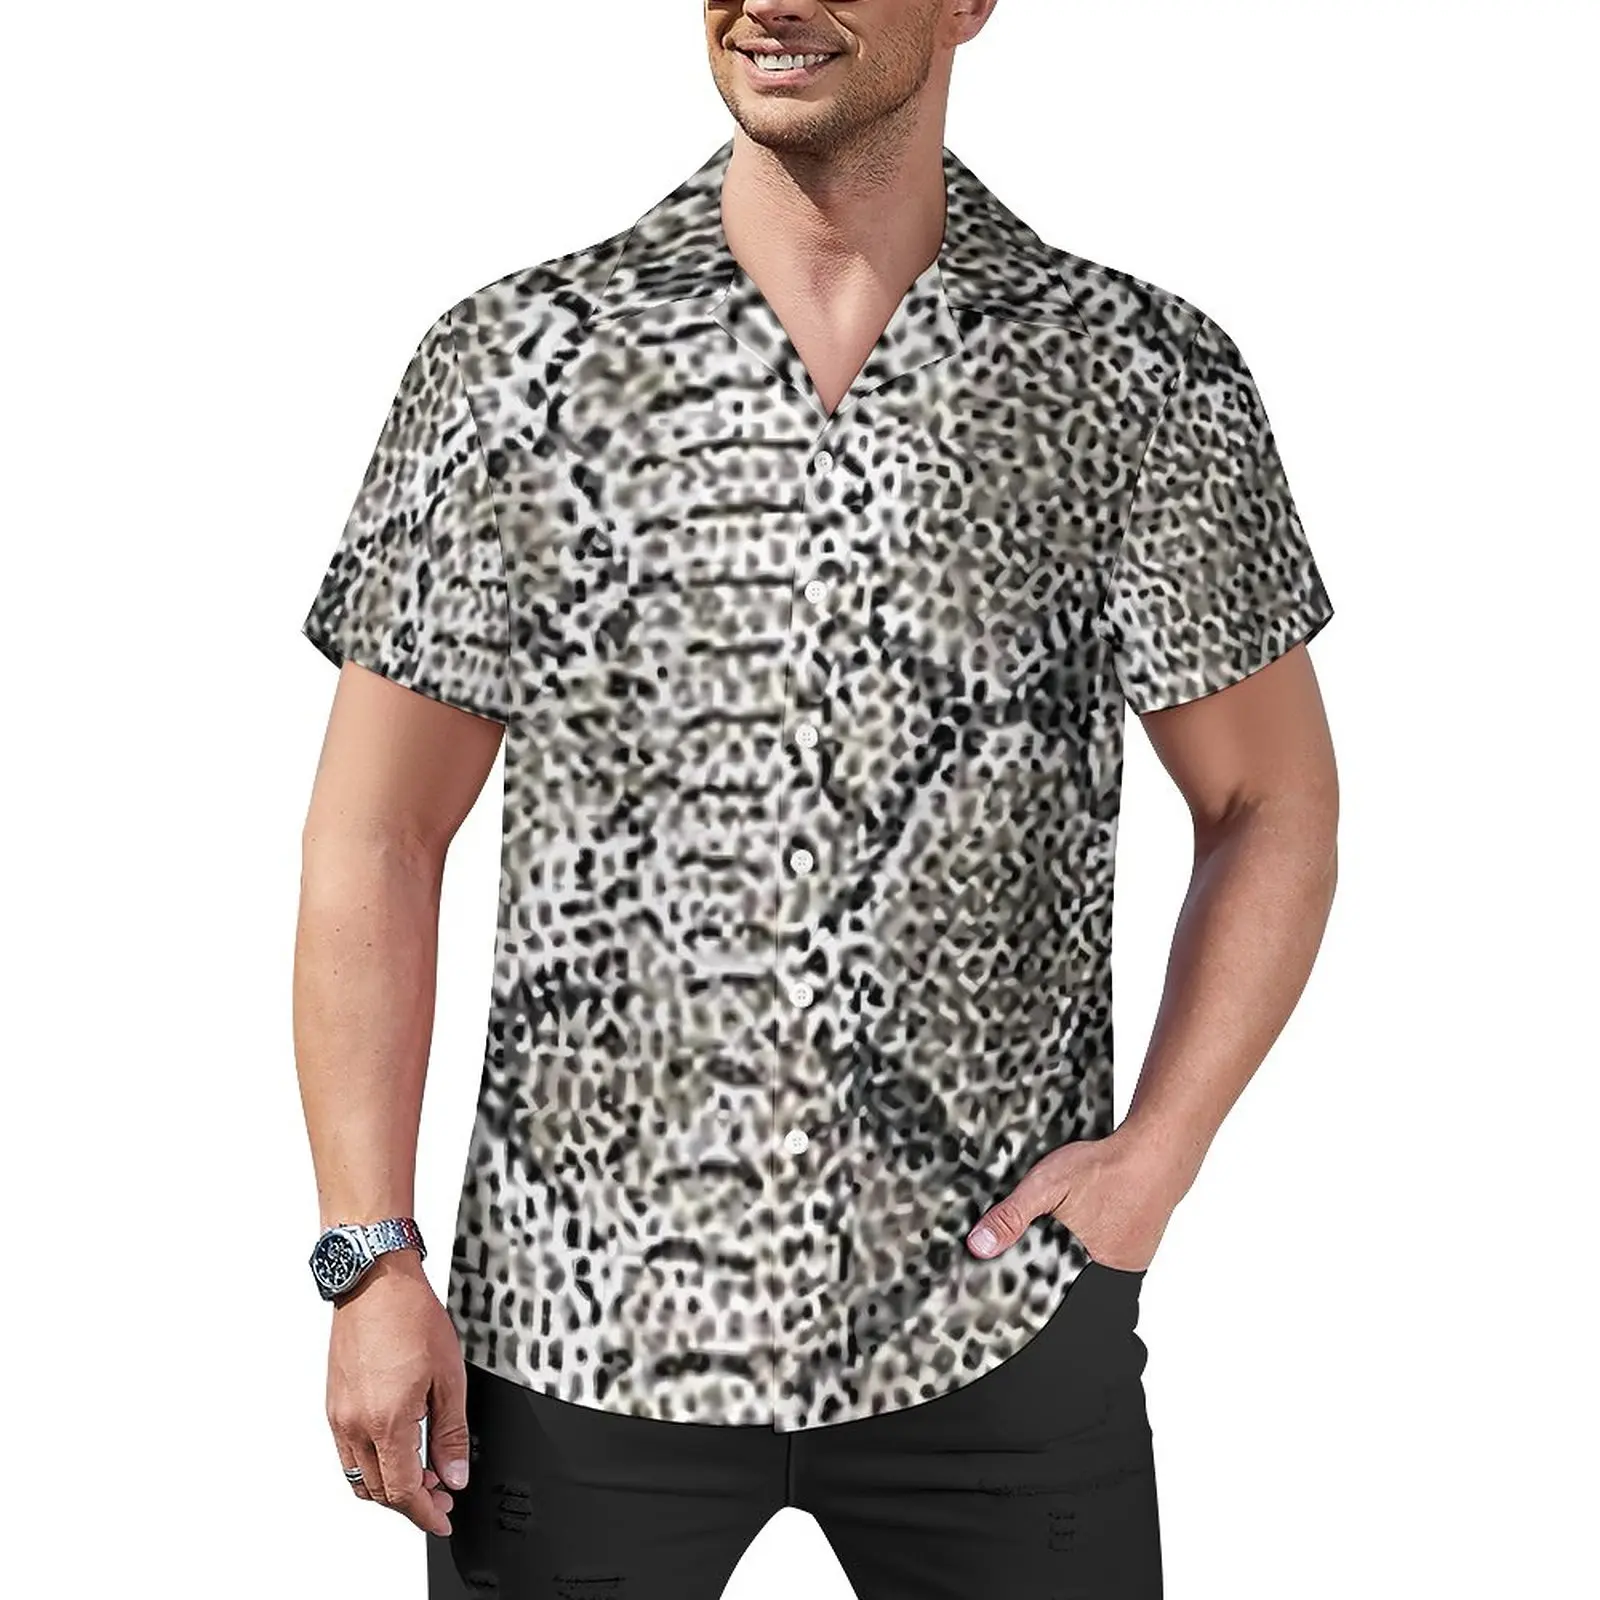 

Gray Snakeskin Vacation Shirt Vintage Print Hawaiian Casual Shirts Men Fashion Blouses Short Sleeve Pattern Top Plus Size 4XL